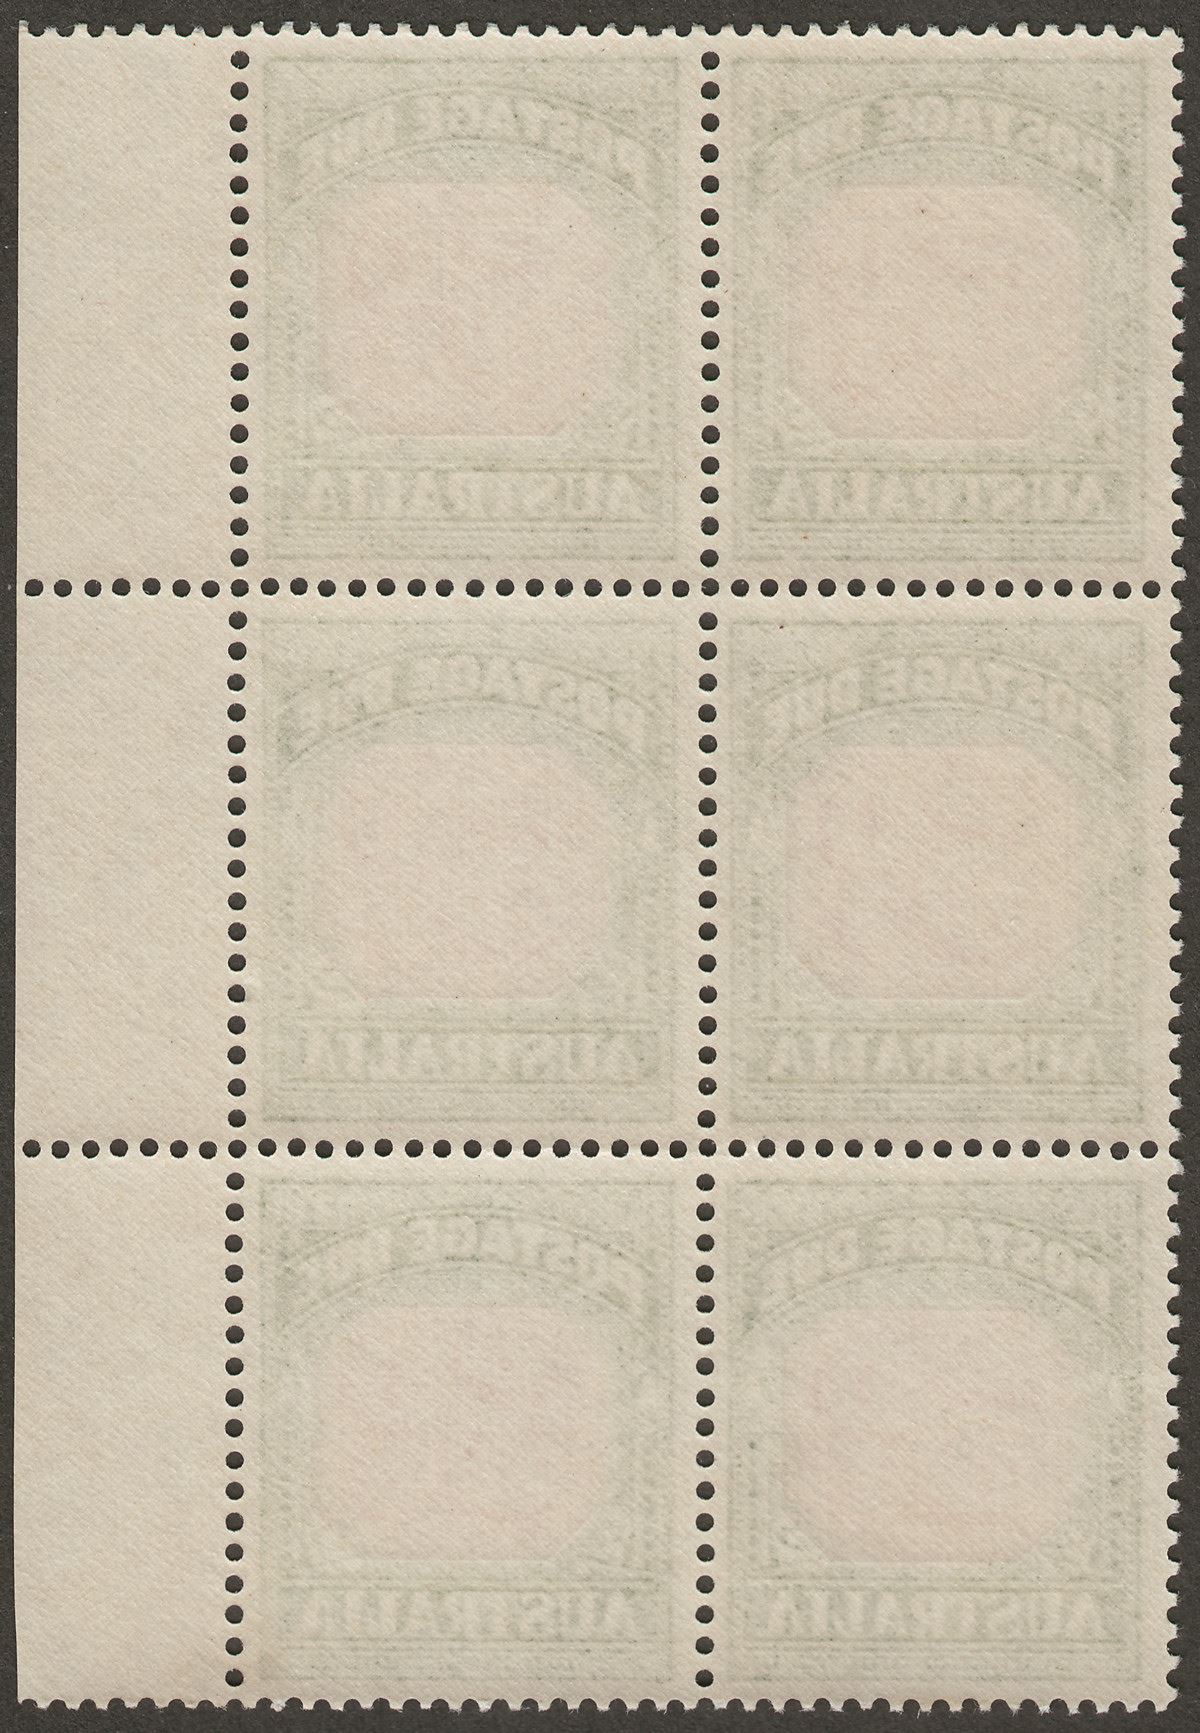 Australia 1959 QEII Postage Due 5d Die II Mint Block w Scratch Variety SG D136a